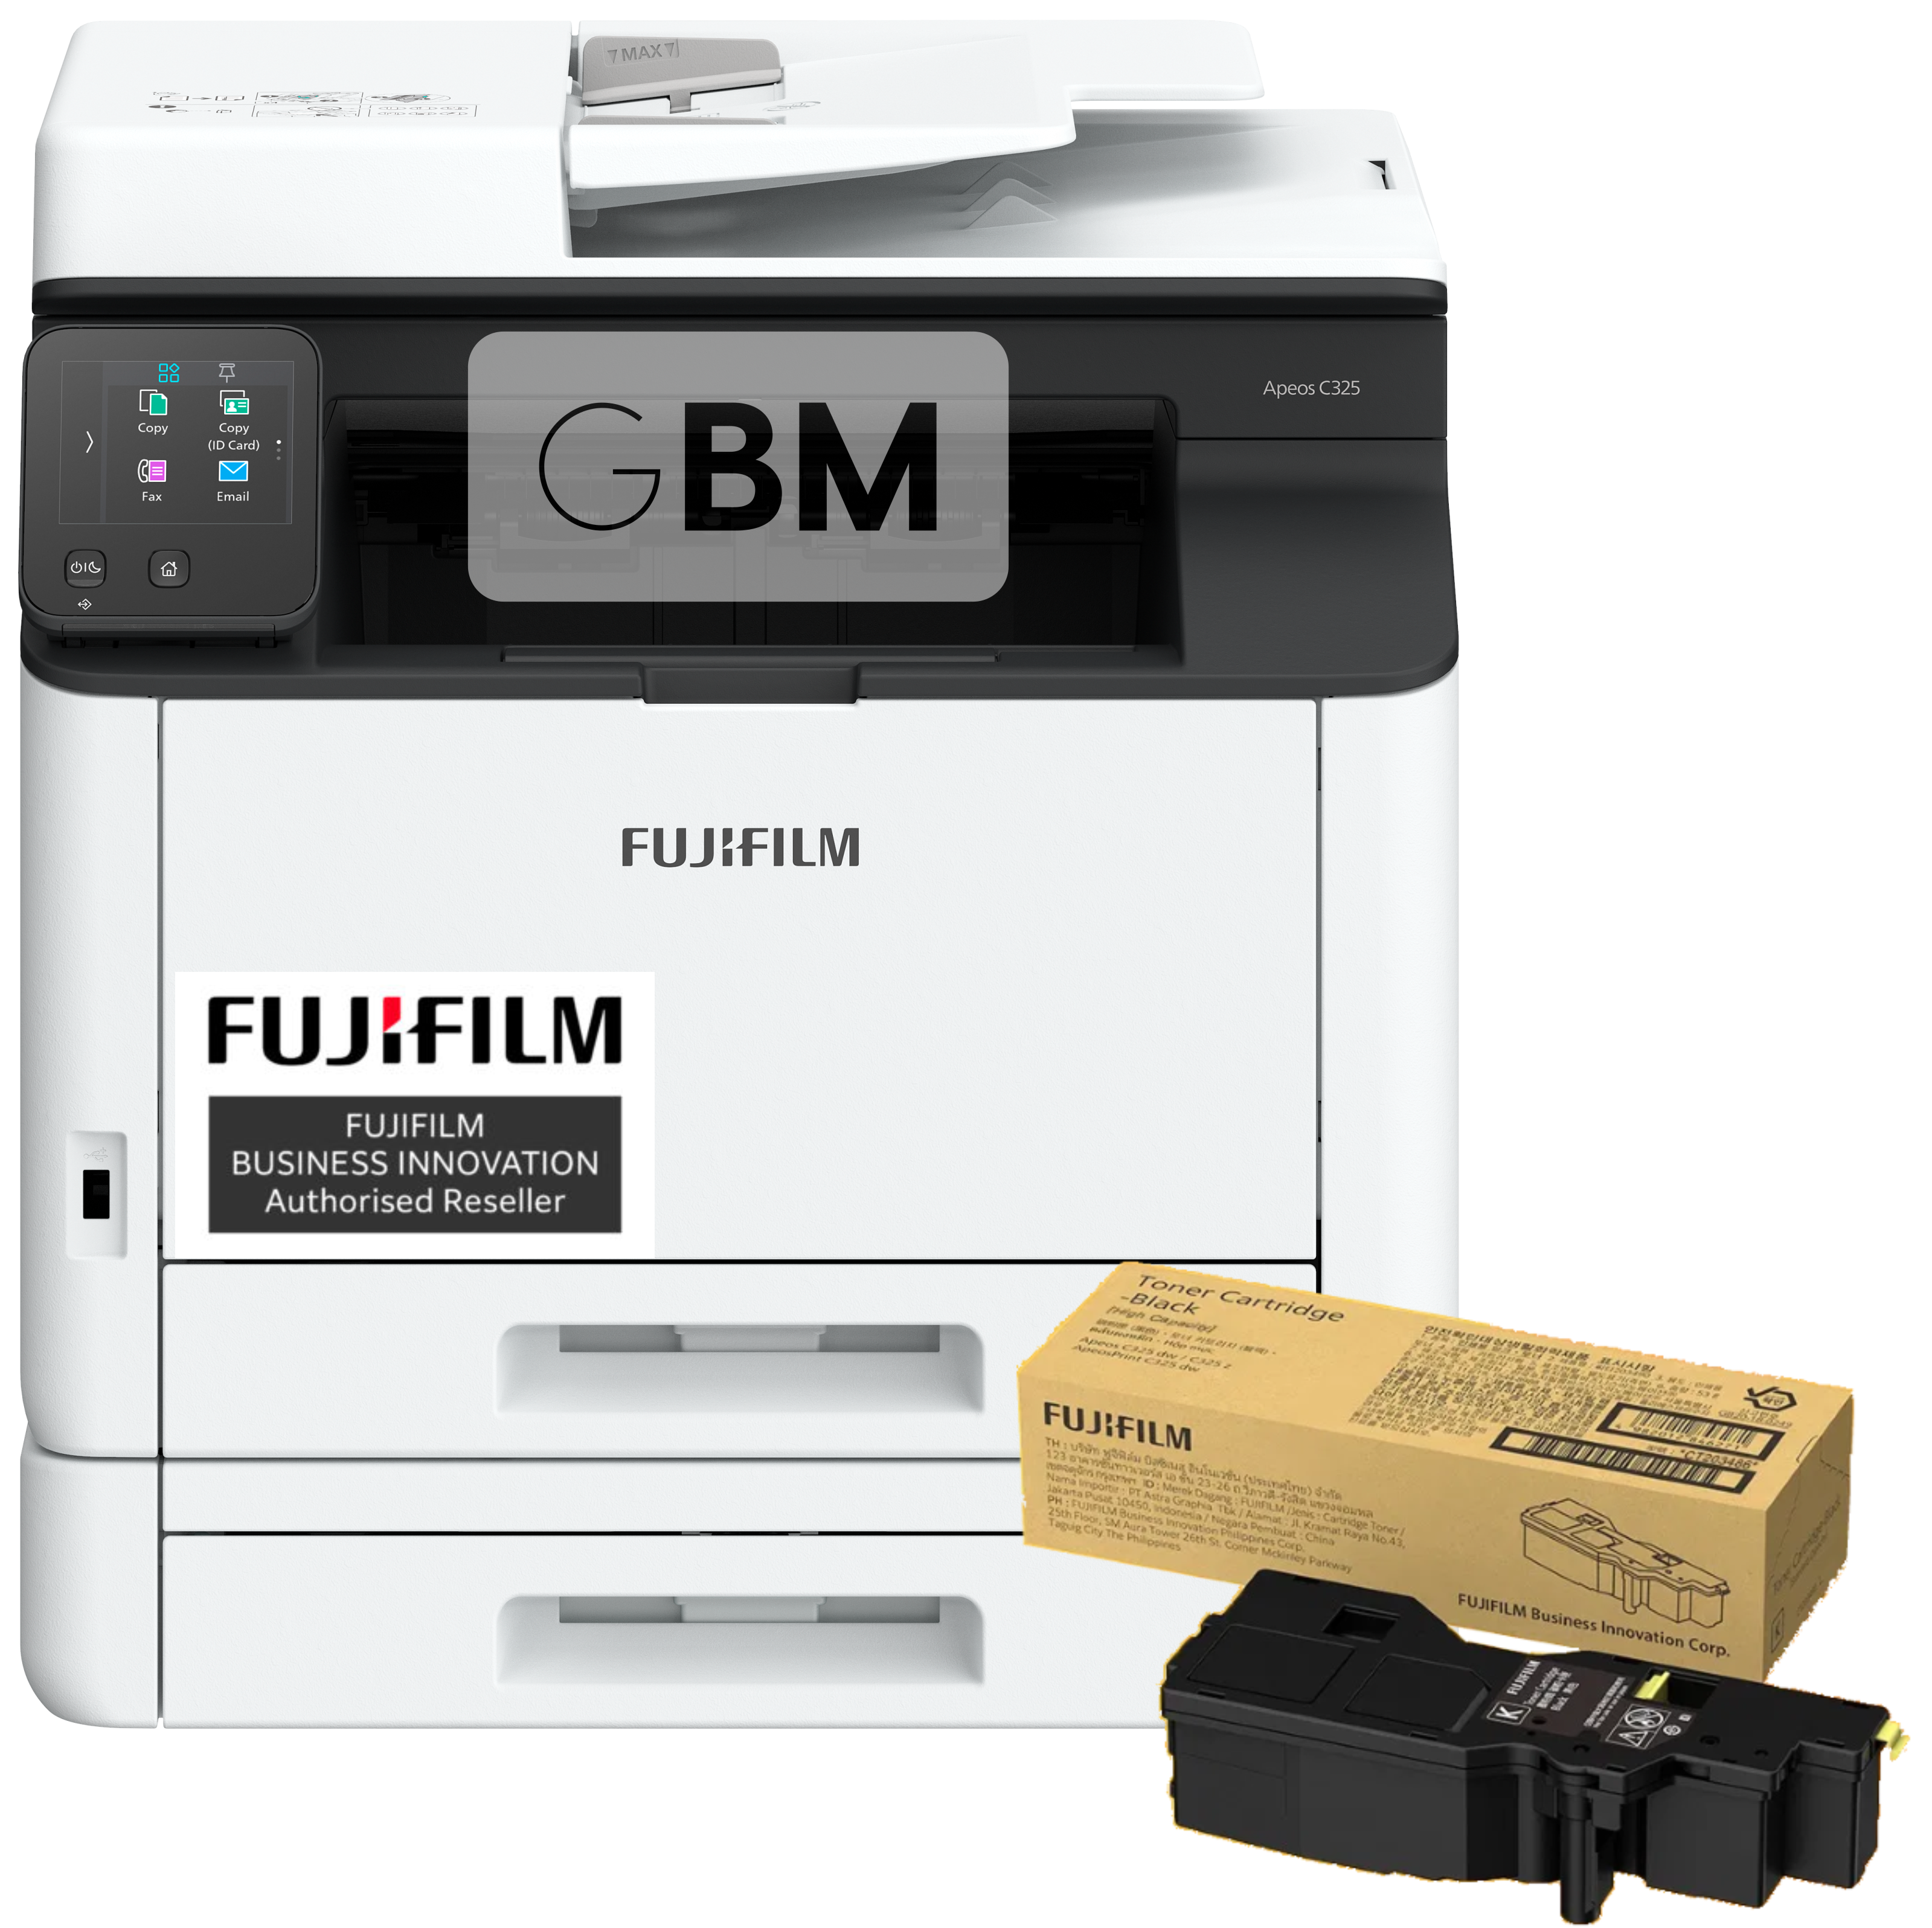 FUJIFILM Apeos C325dwt A4 Colour Multifunction Printer with 2nd Sheet Feeder + Bonus 6k Black Toner & 3Y Warranty)